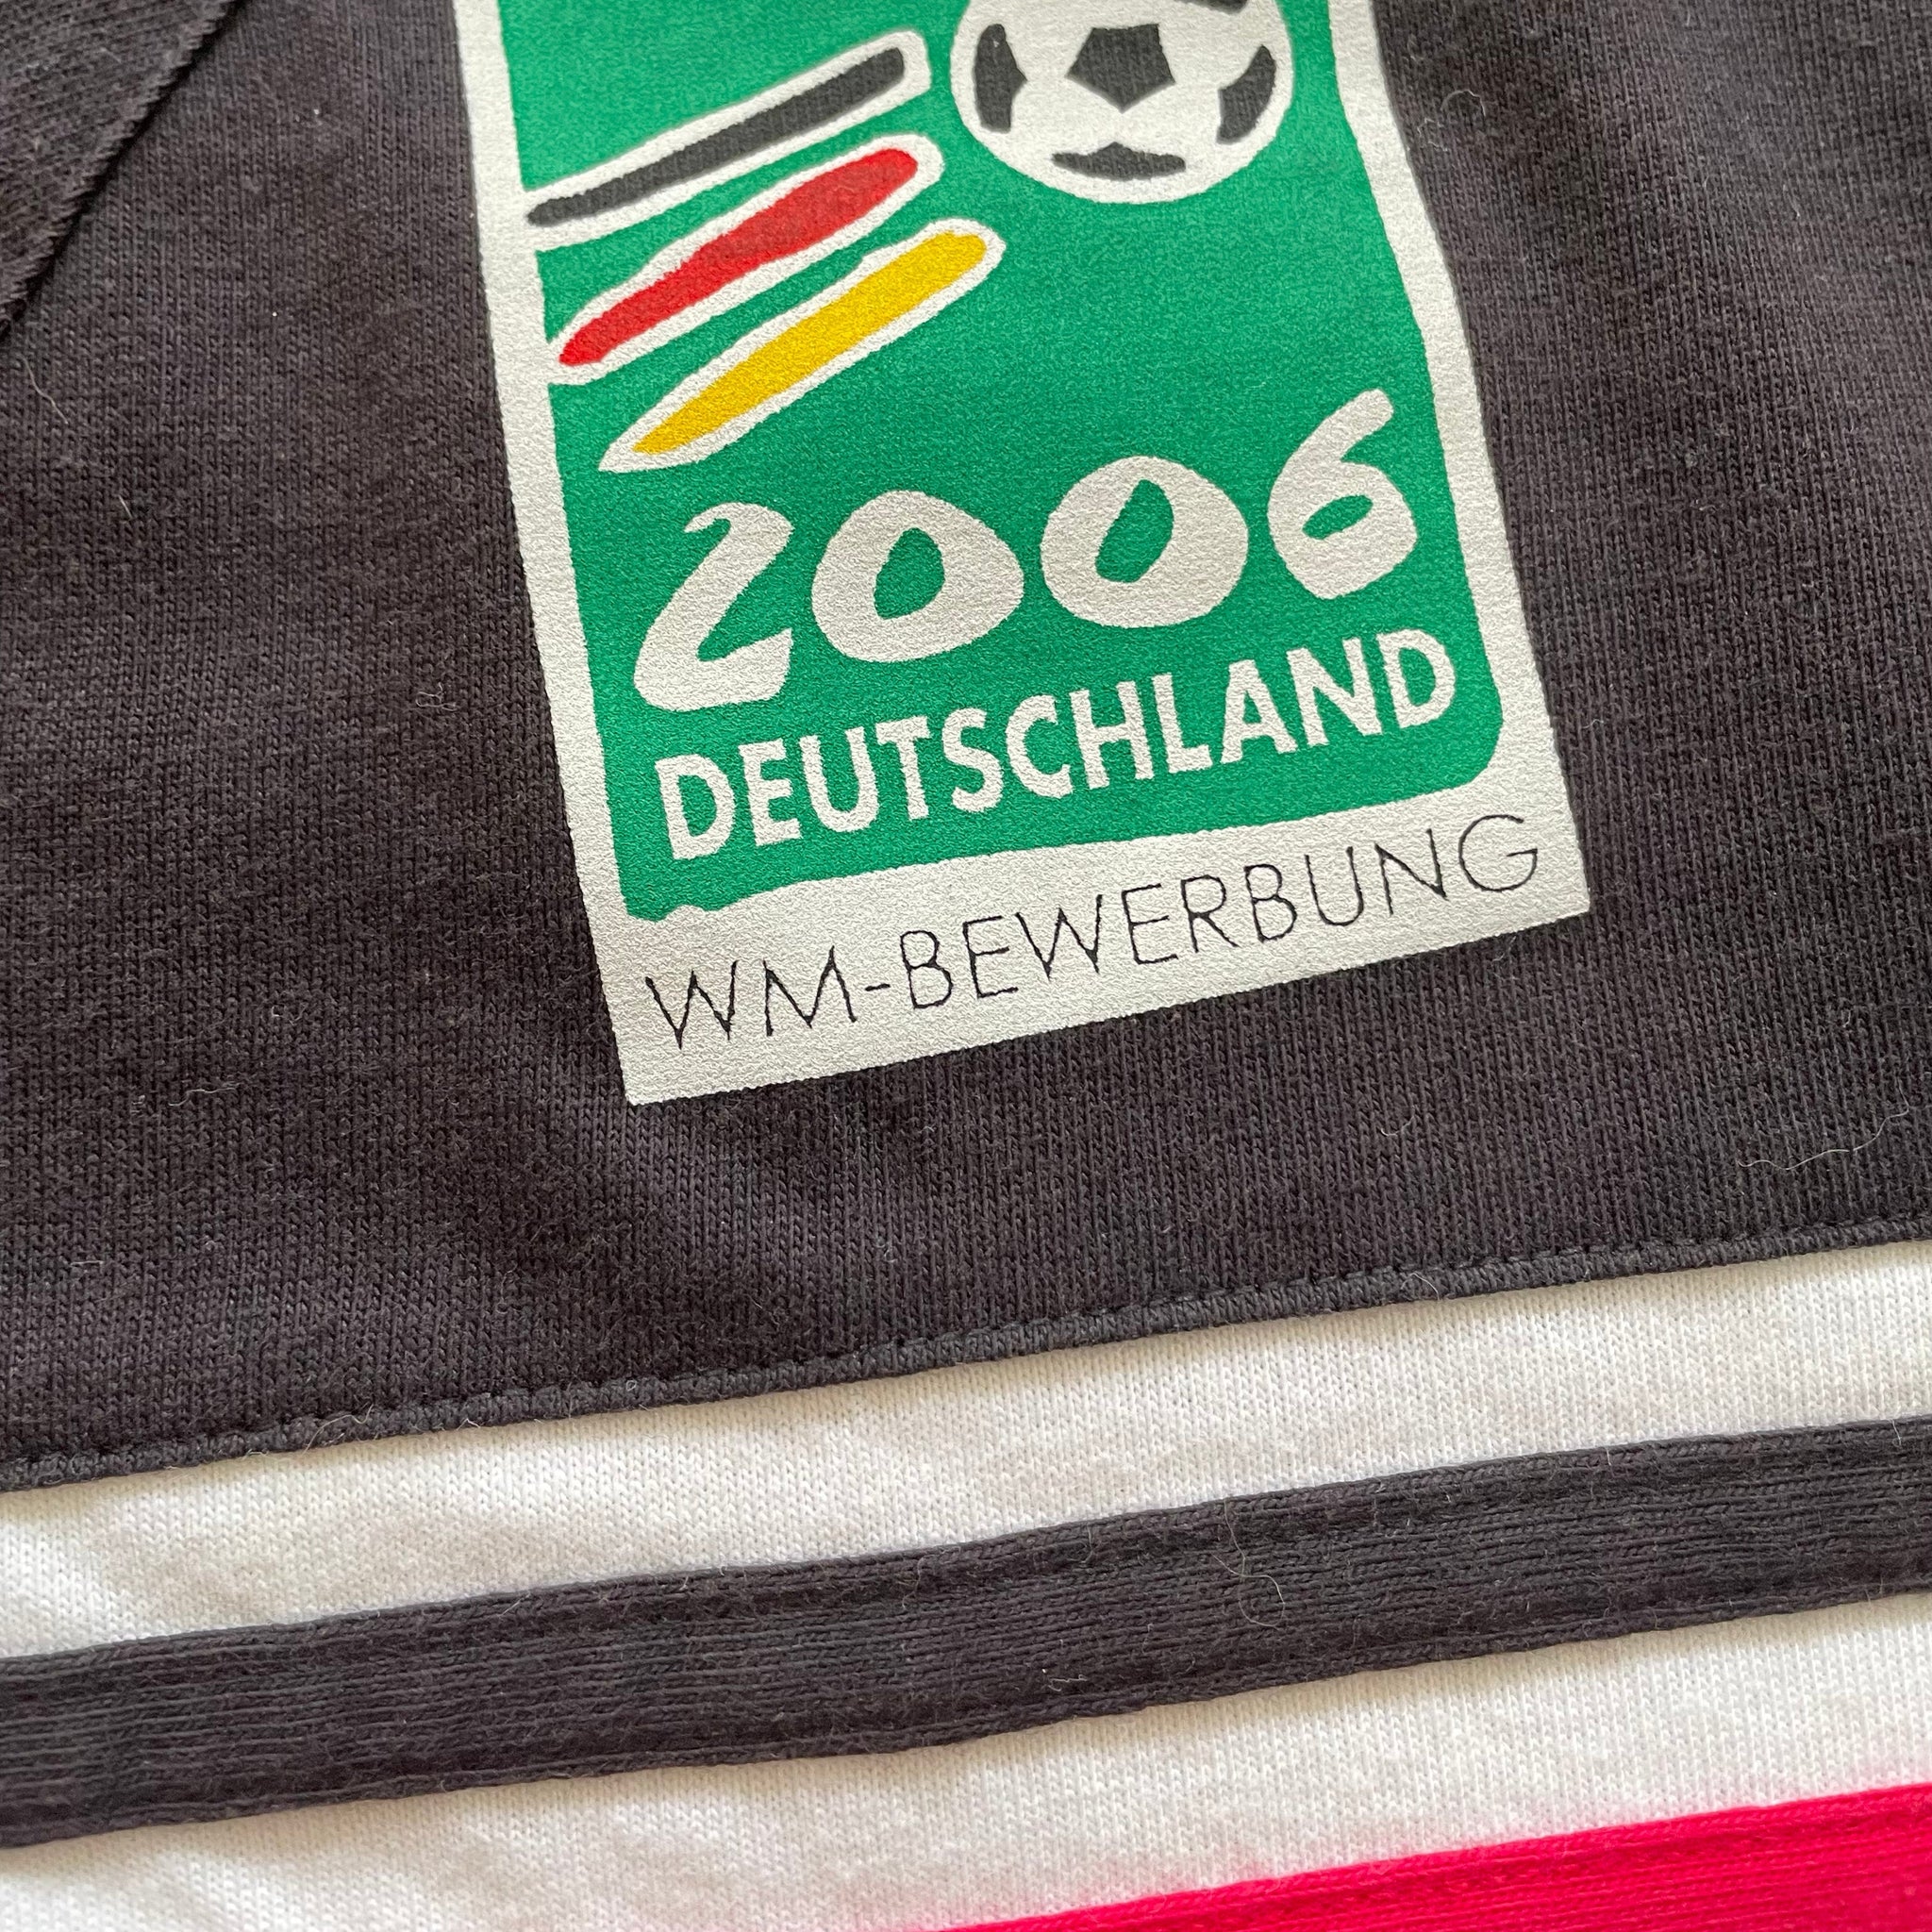 Adidas German 2006 "Bid" Team Shirt - L